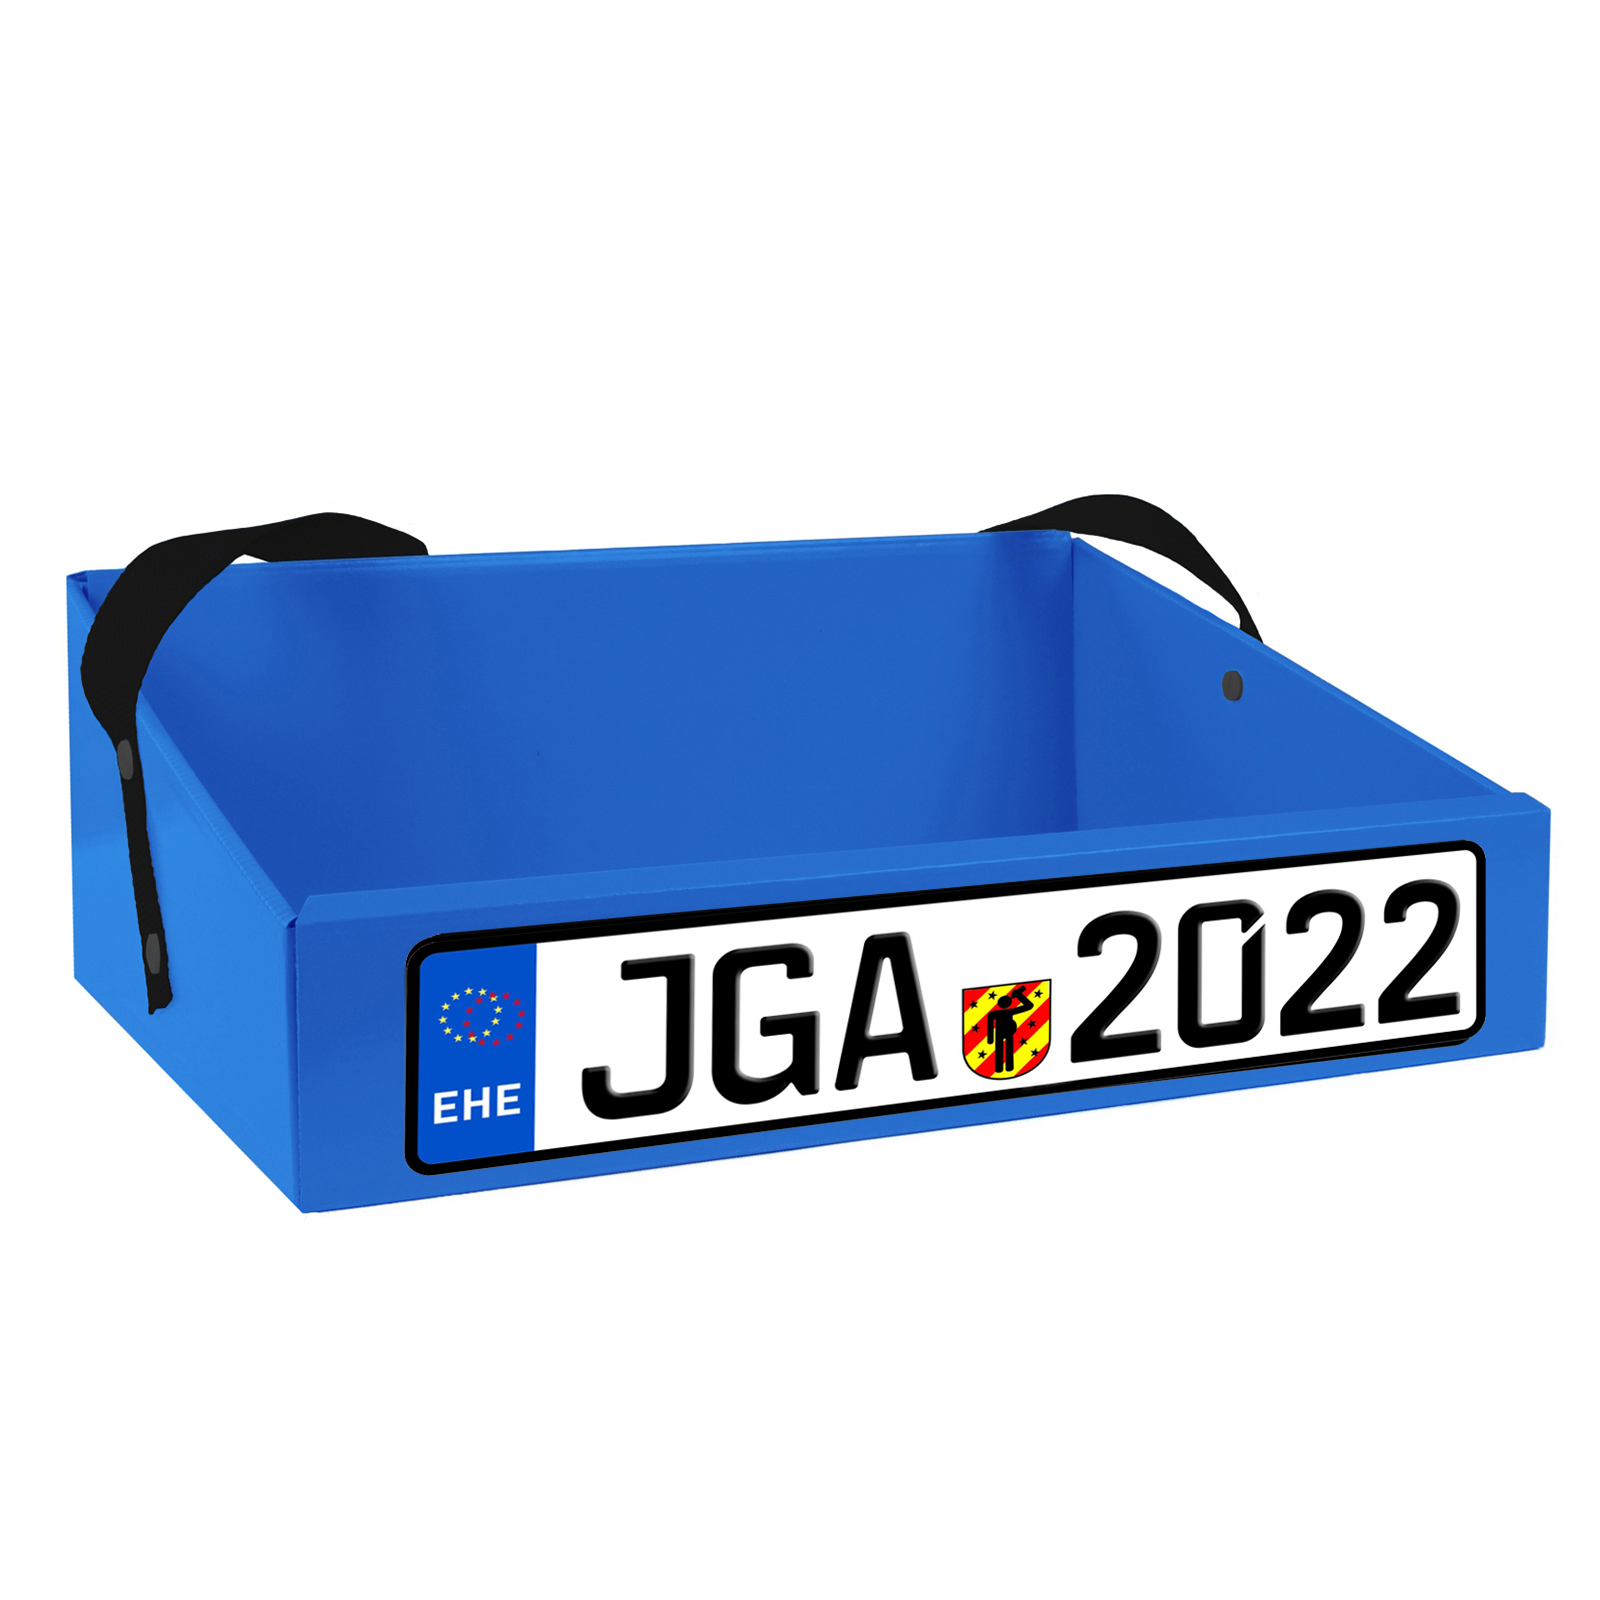 Bauchladen Kfz Jga 2022 blau